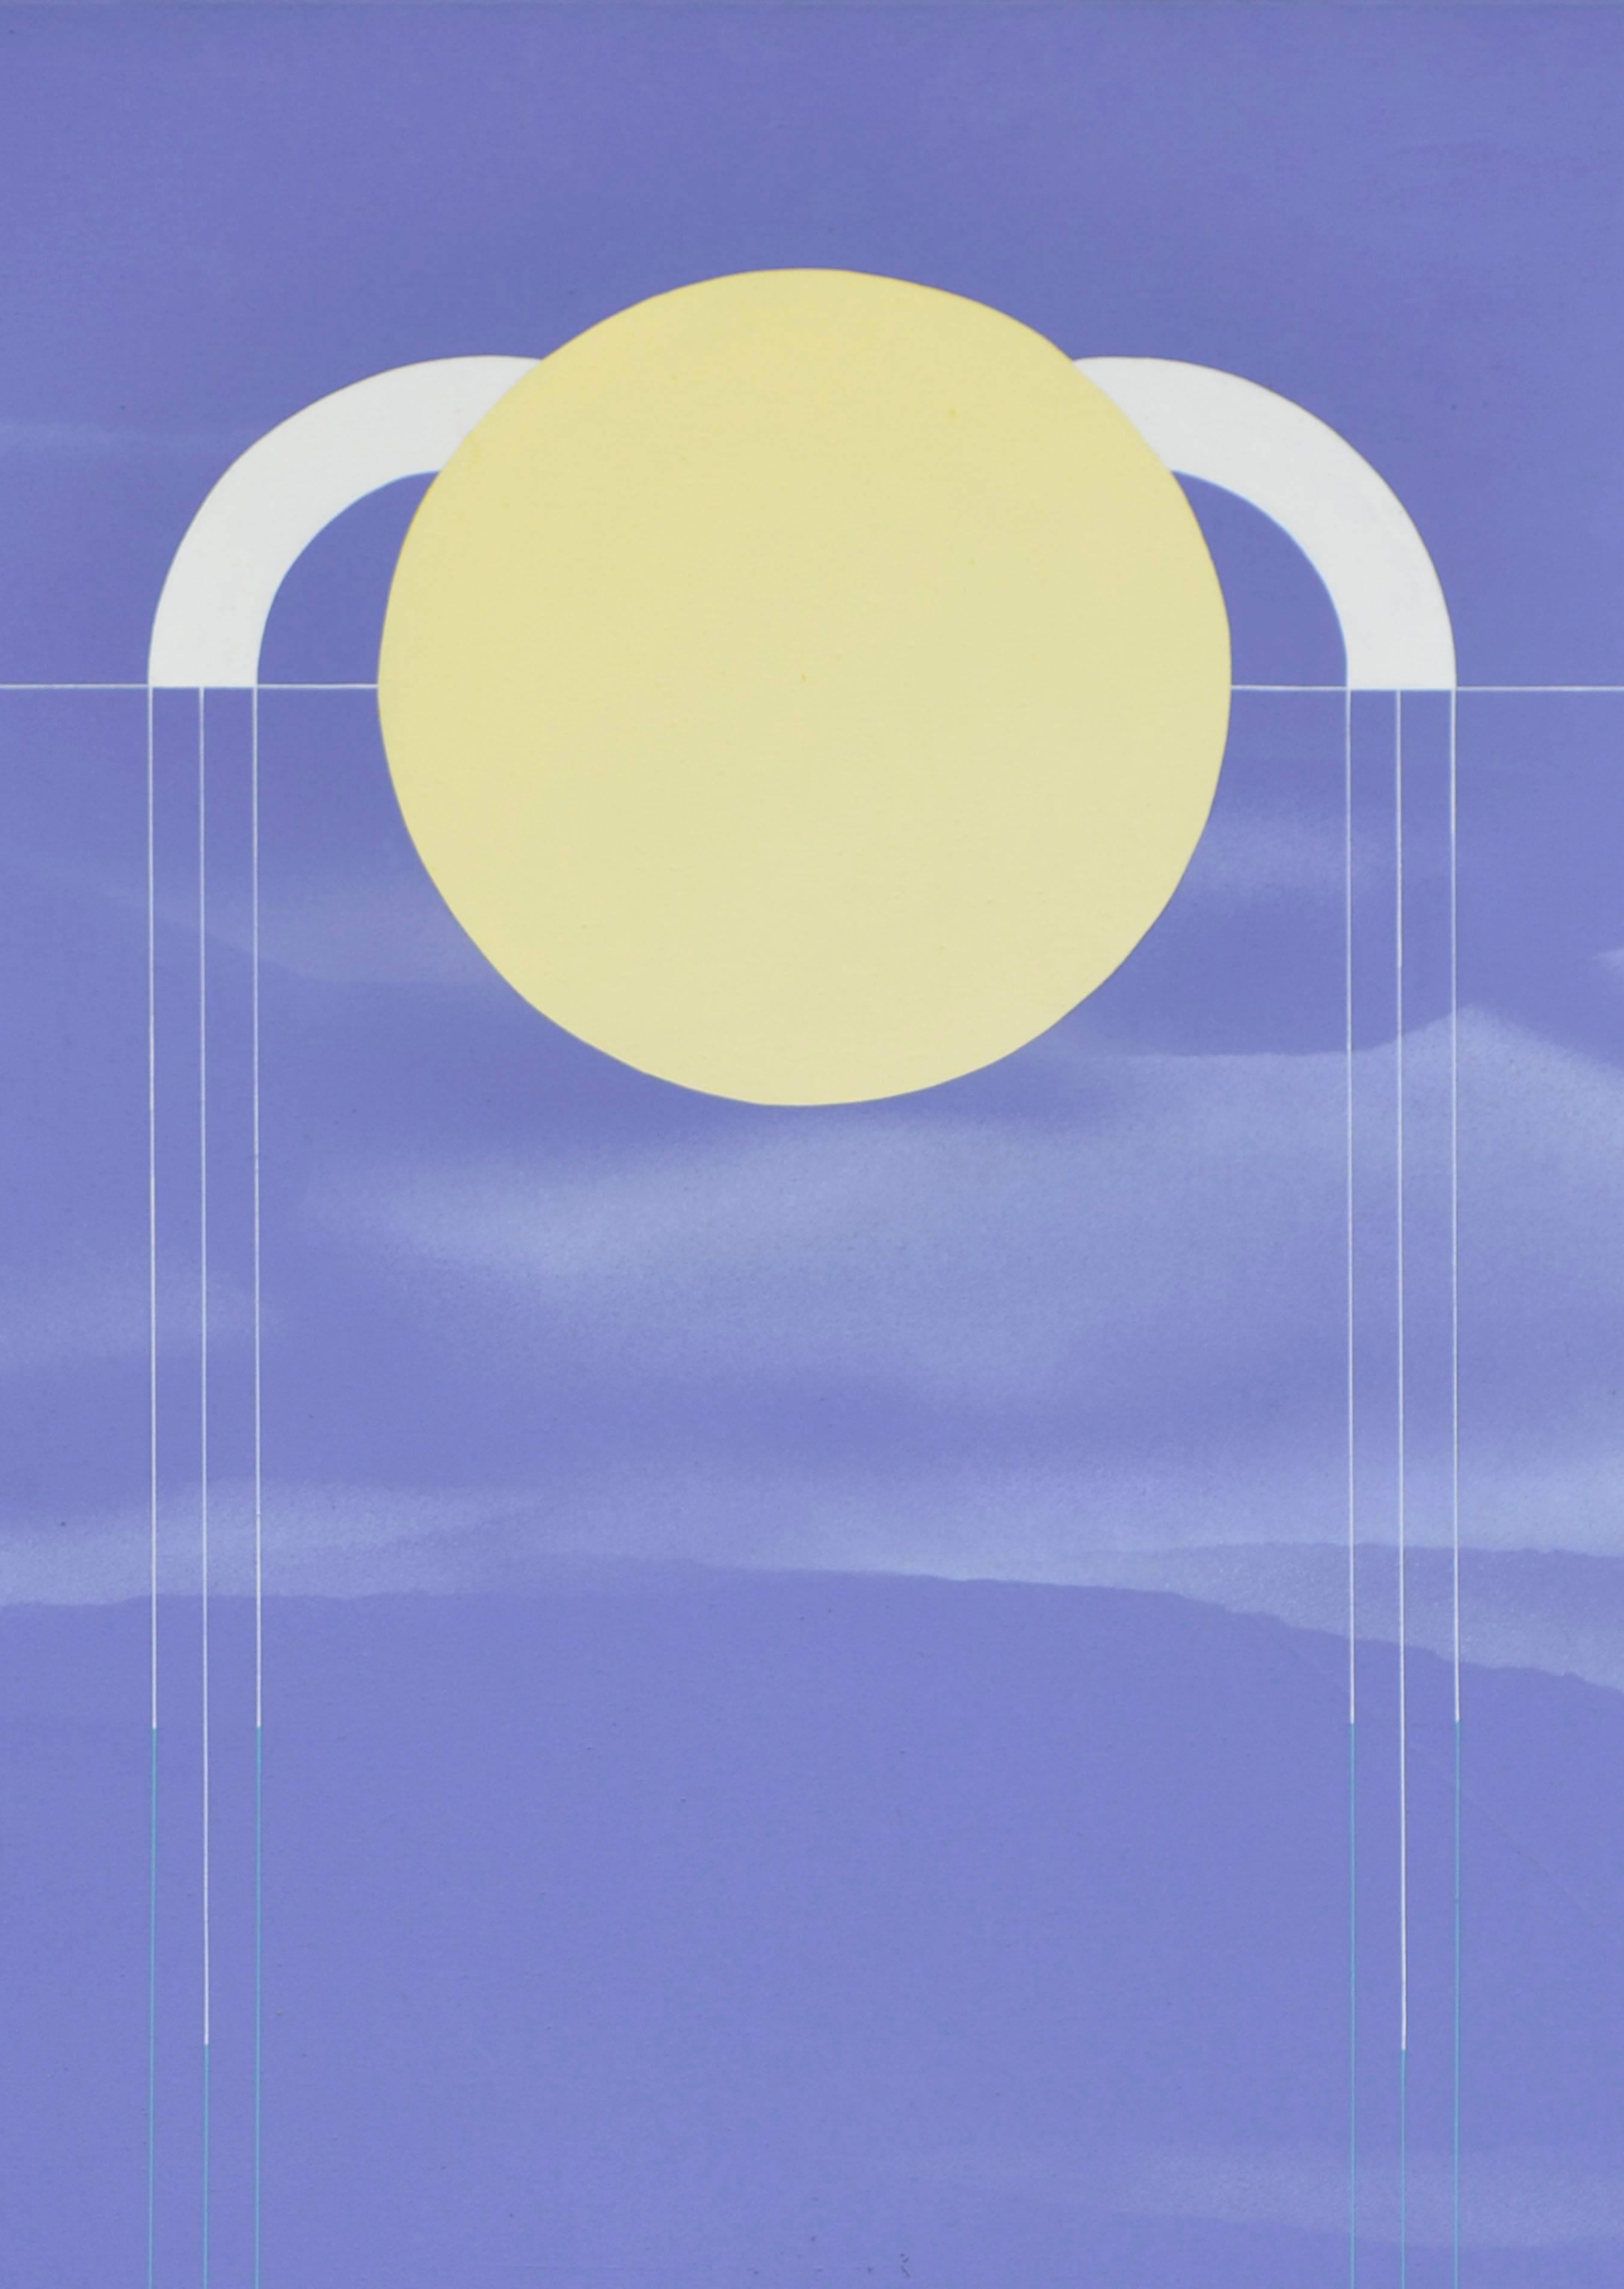 Zuni Moon - 1970's Minimalist Geometric Abstract  - Painting by Arn Ghigliazza